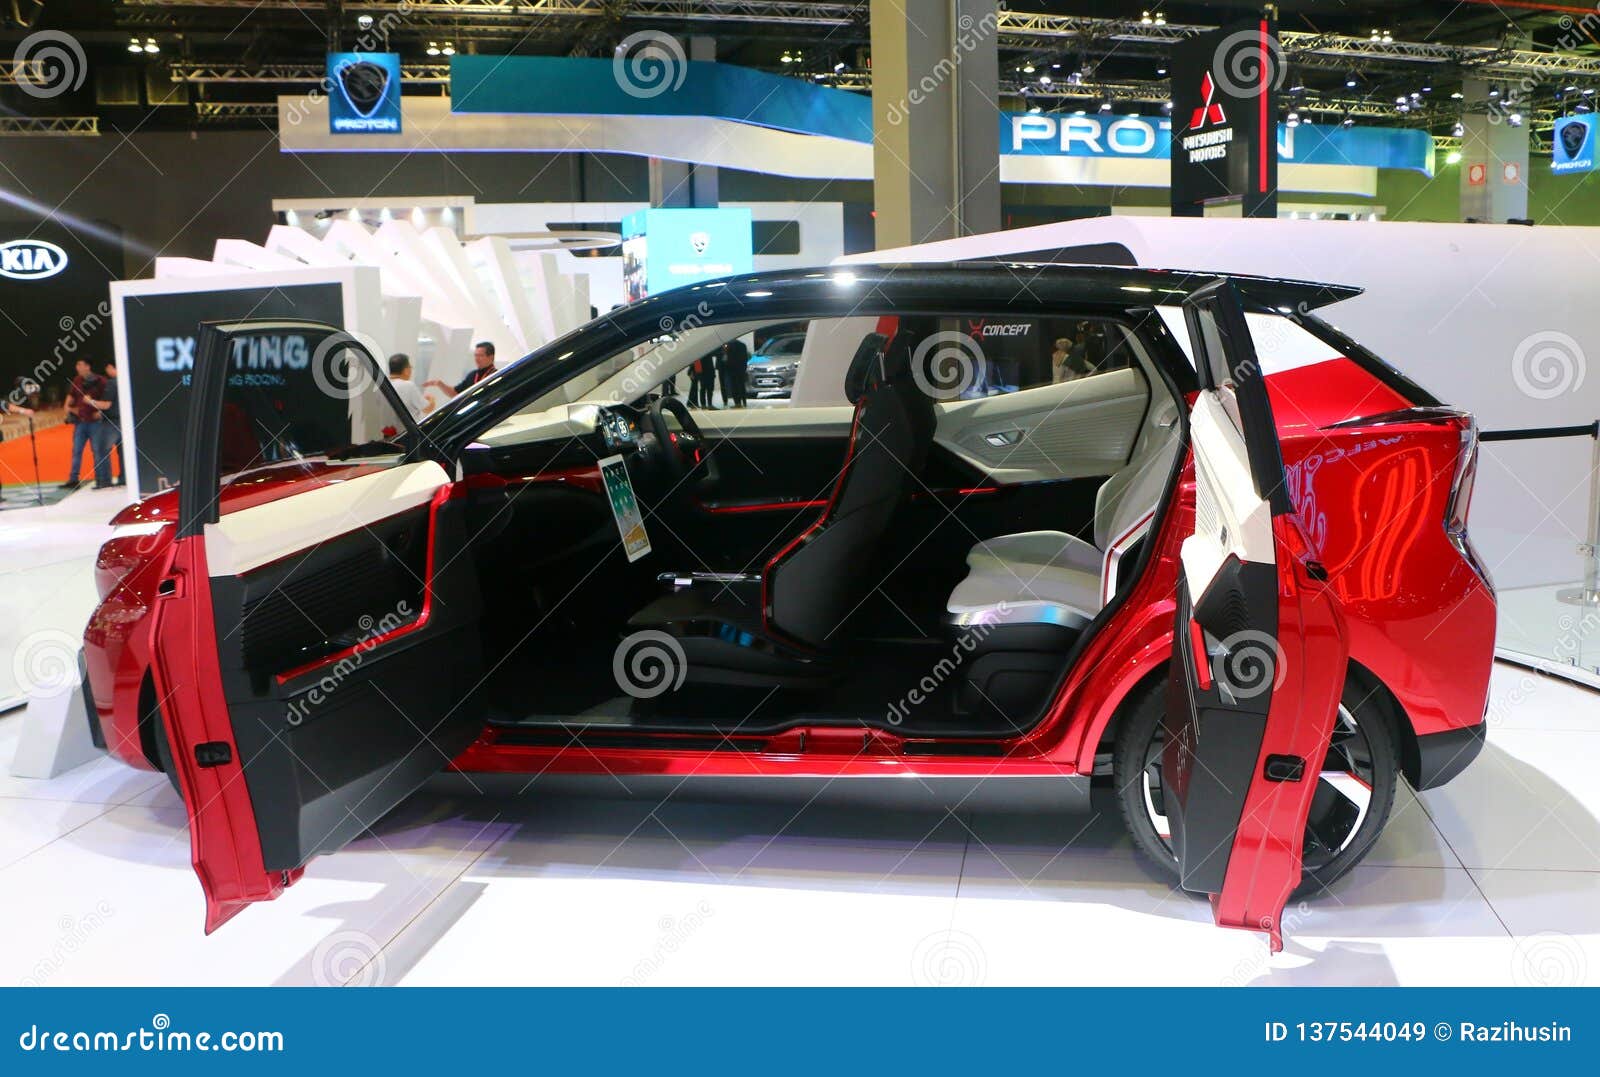 Perodua X Concept Futuristic Car Prototype Displayed 